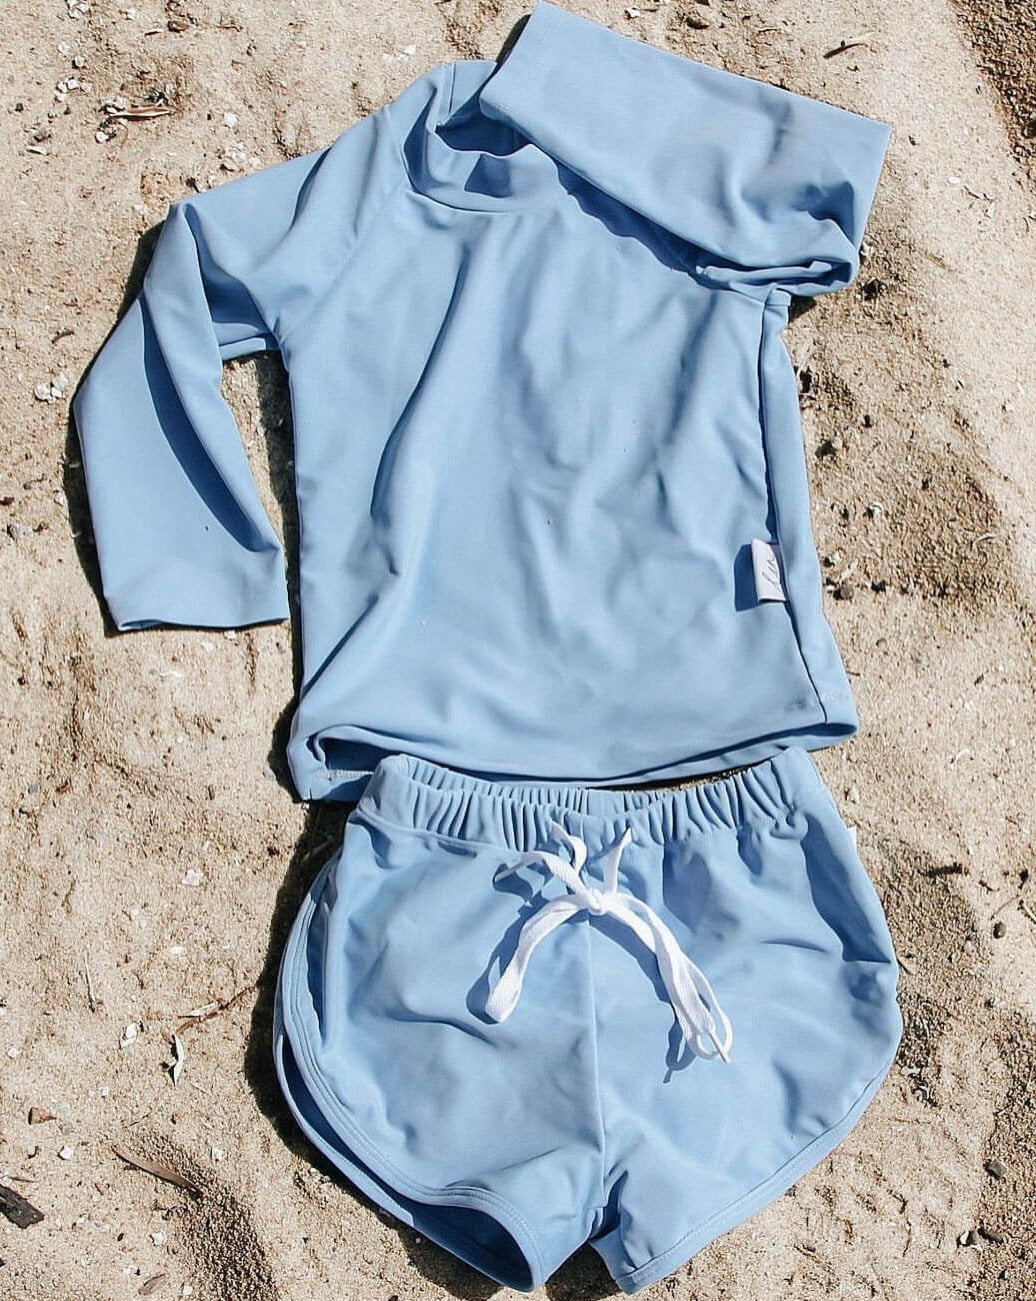 Rashie Top and Short Swim Set Blue - Baby/Toddler/Child